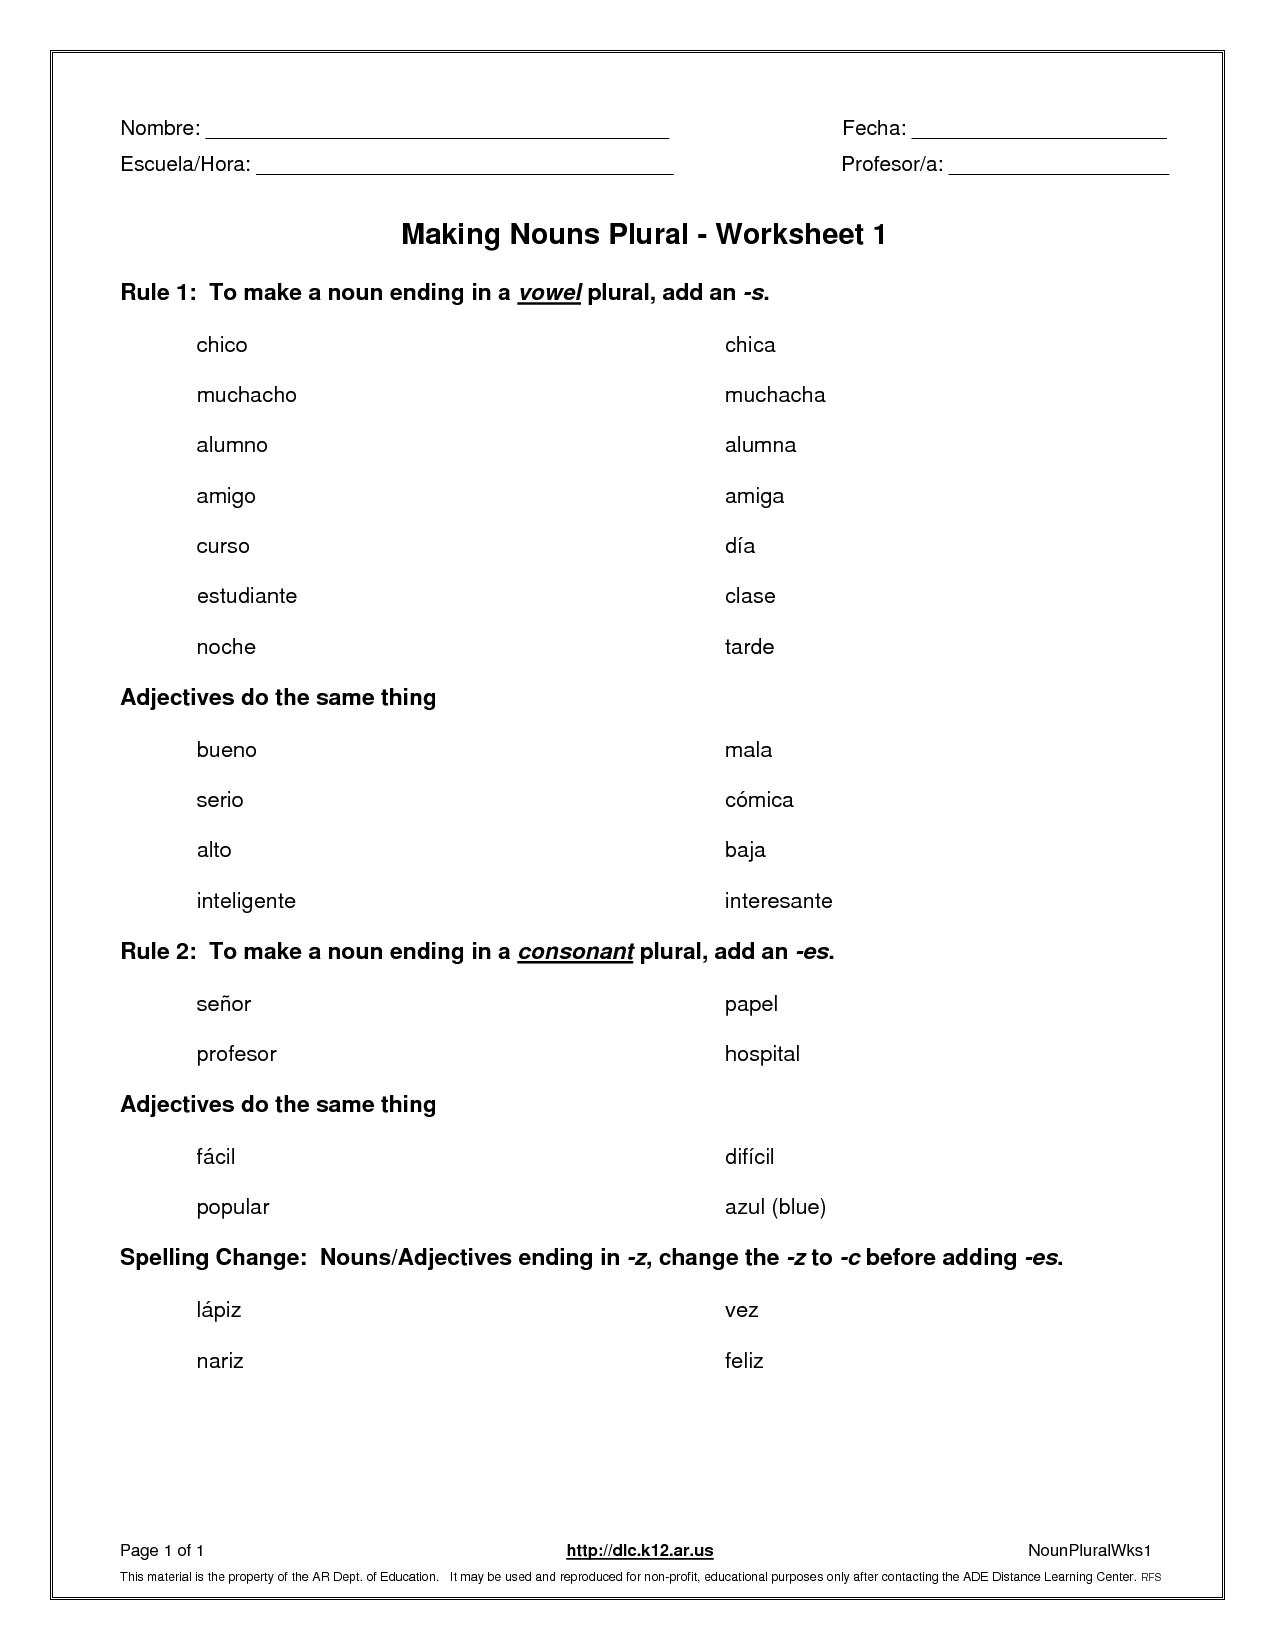 possessive-singular-and-plural-nouns-worksheets